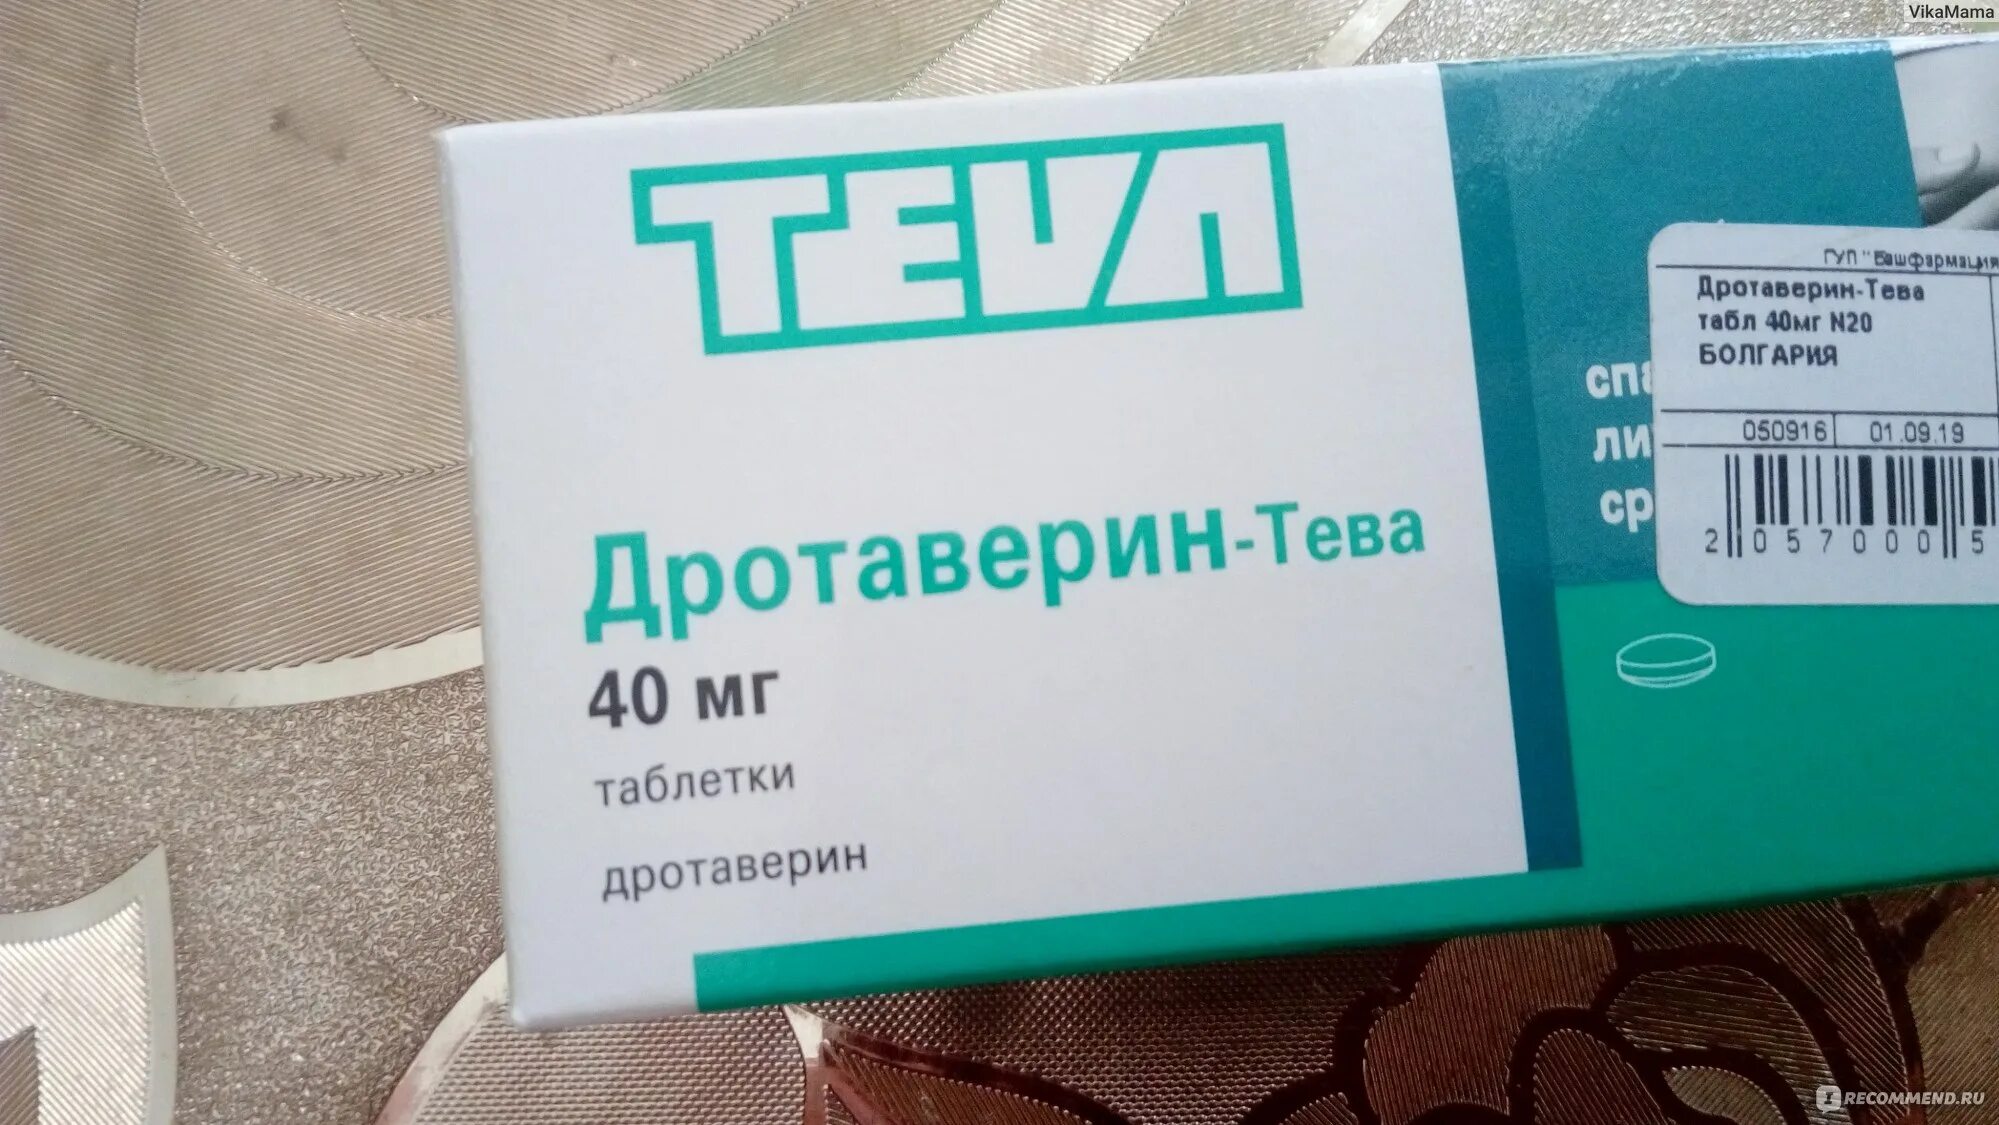 Таблетки дротаверин Тева. Дротаверин 40 мг Тева. Фирма Тева лекарства. Лекарство Teva лекарство.